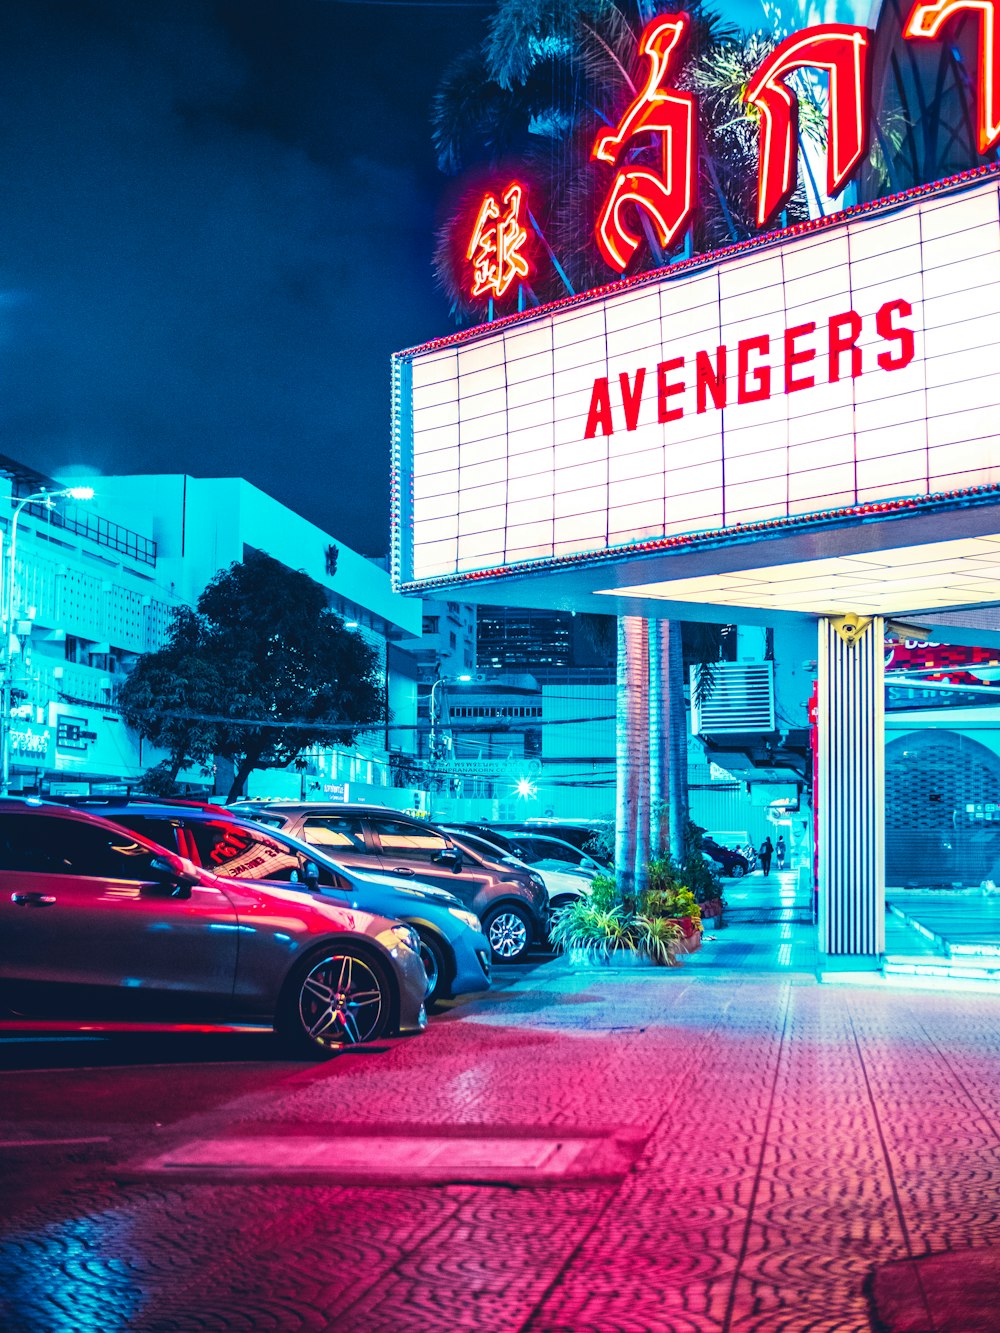 vehicles parked beside Avengers signage